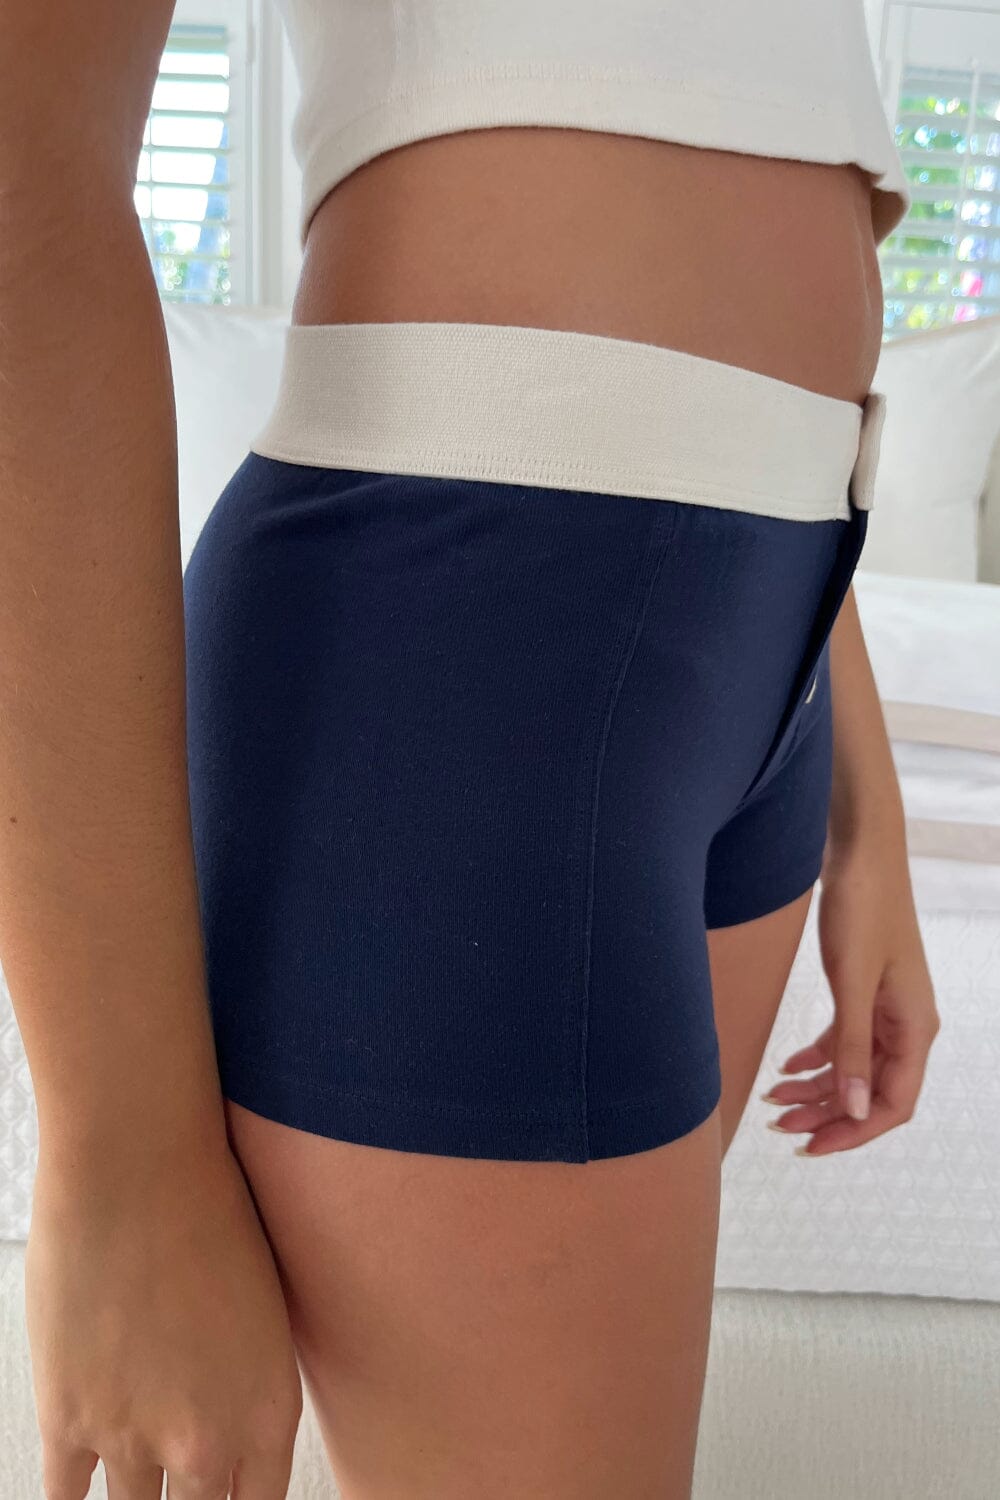 NoBo blue boy-short panties Junior size 19 (XXL)